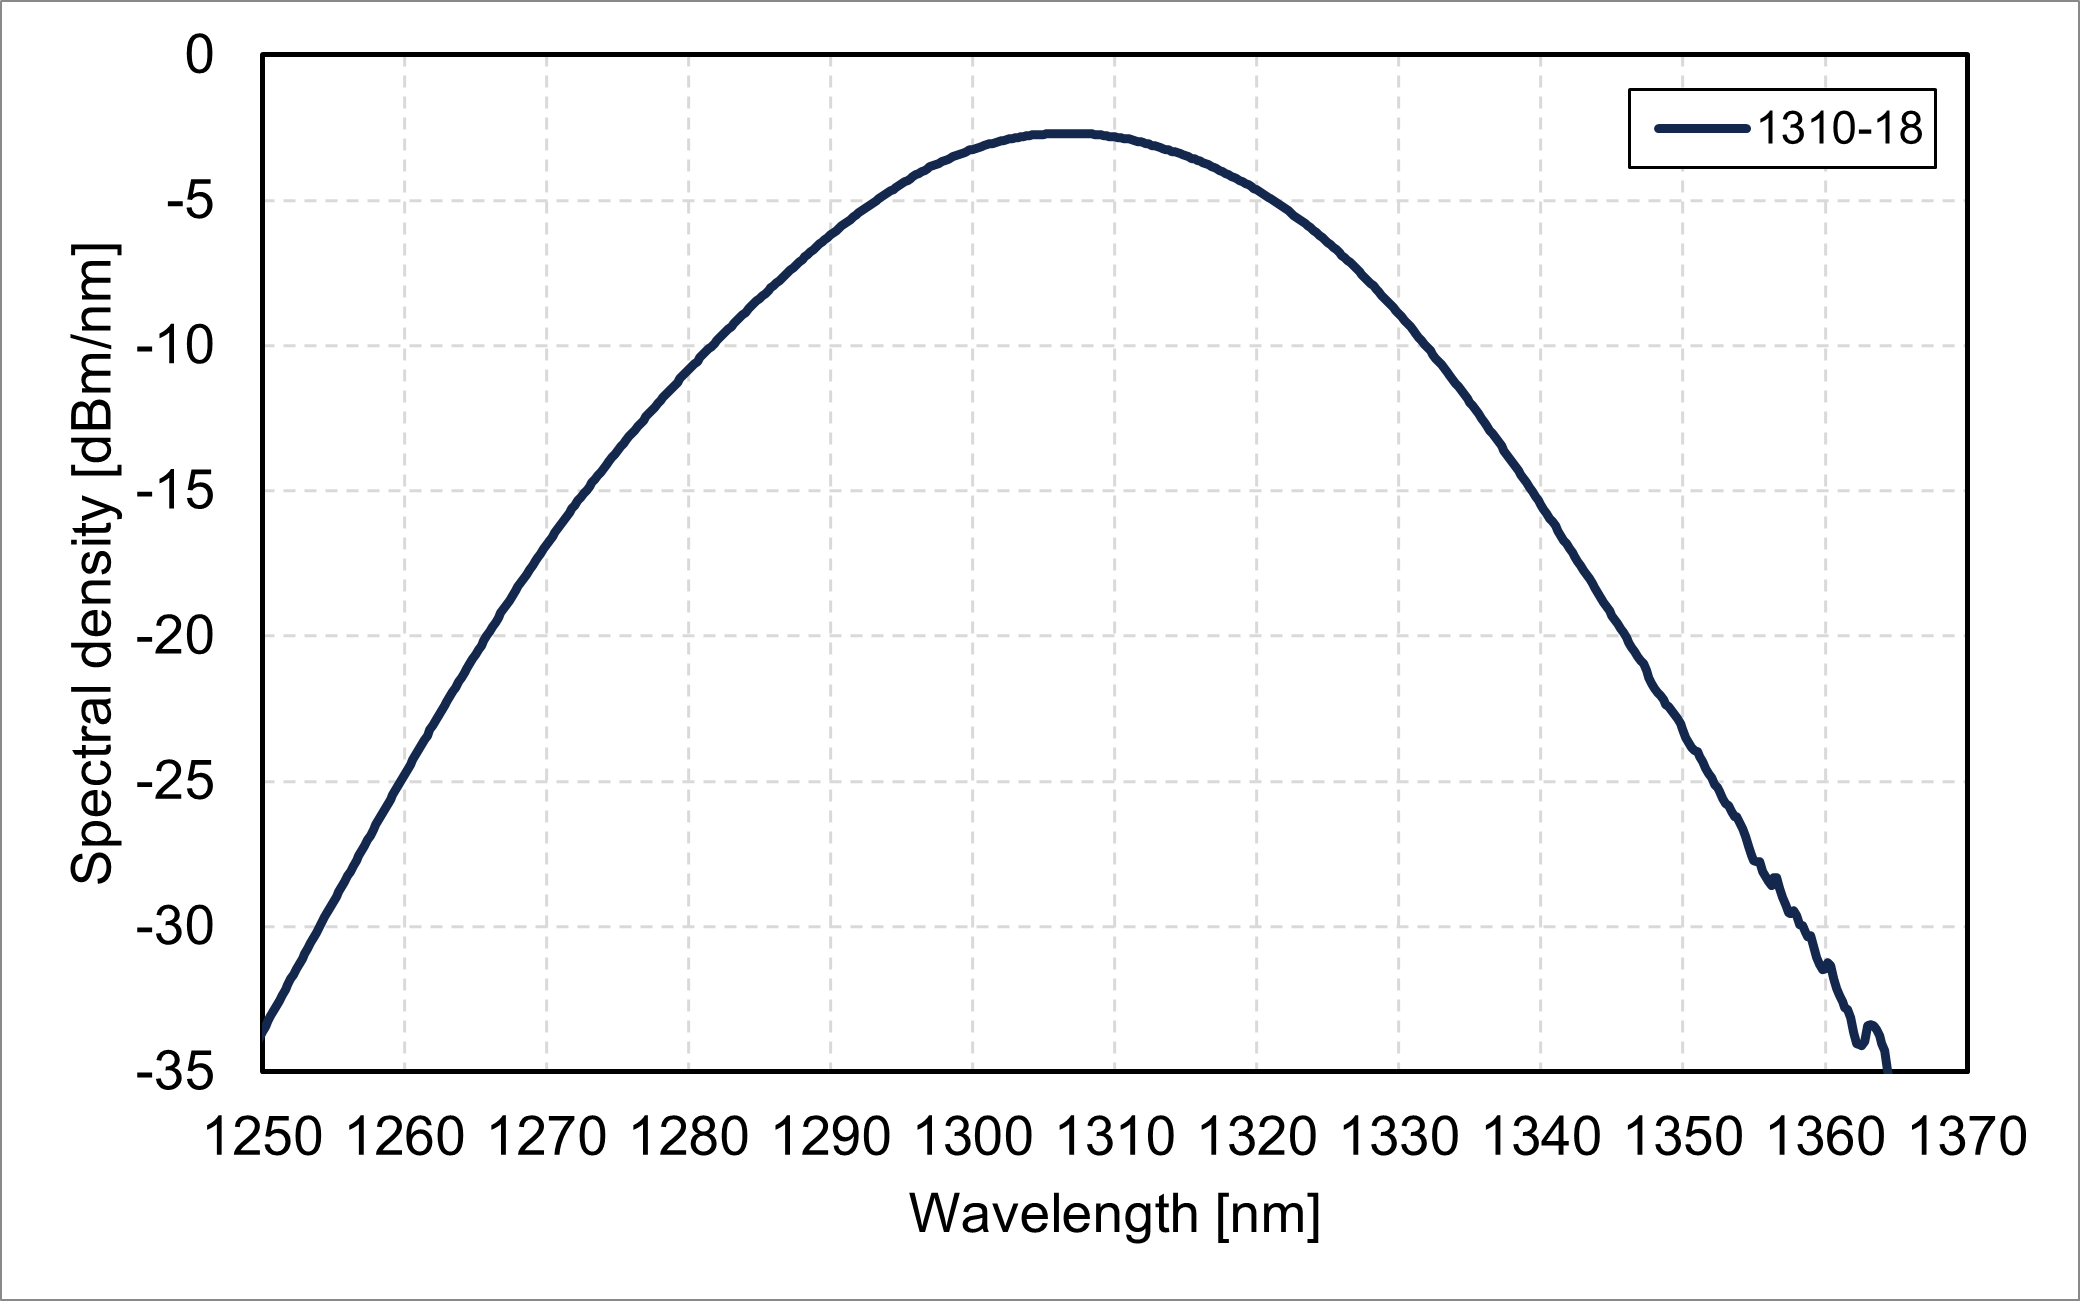 Spectral density vs. wavelength (1310-18)